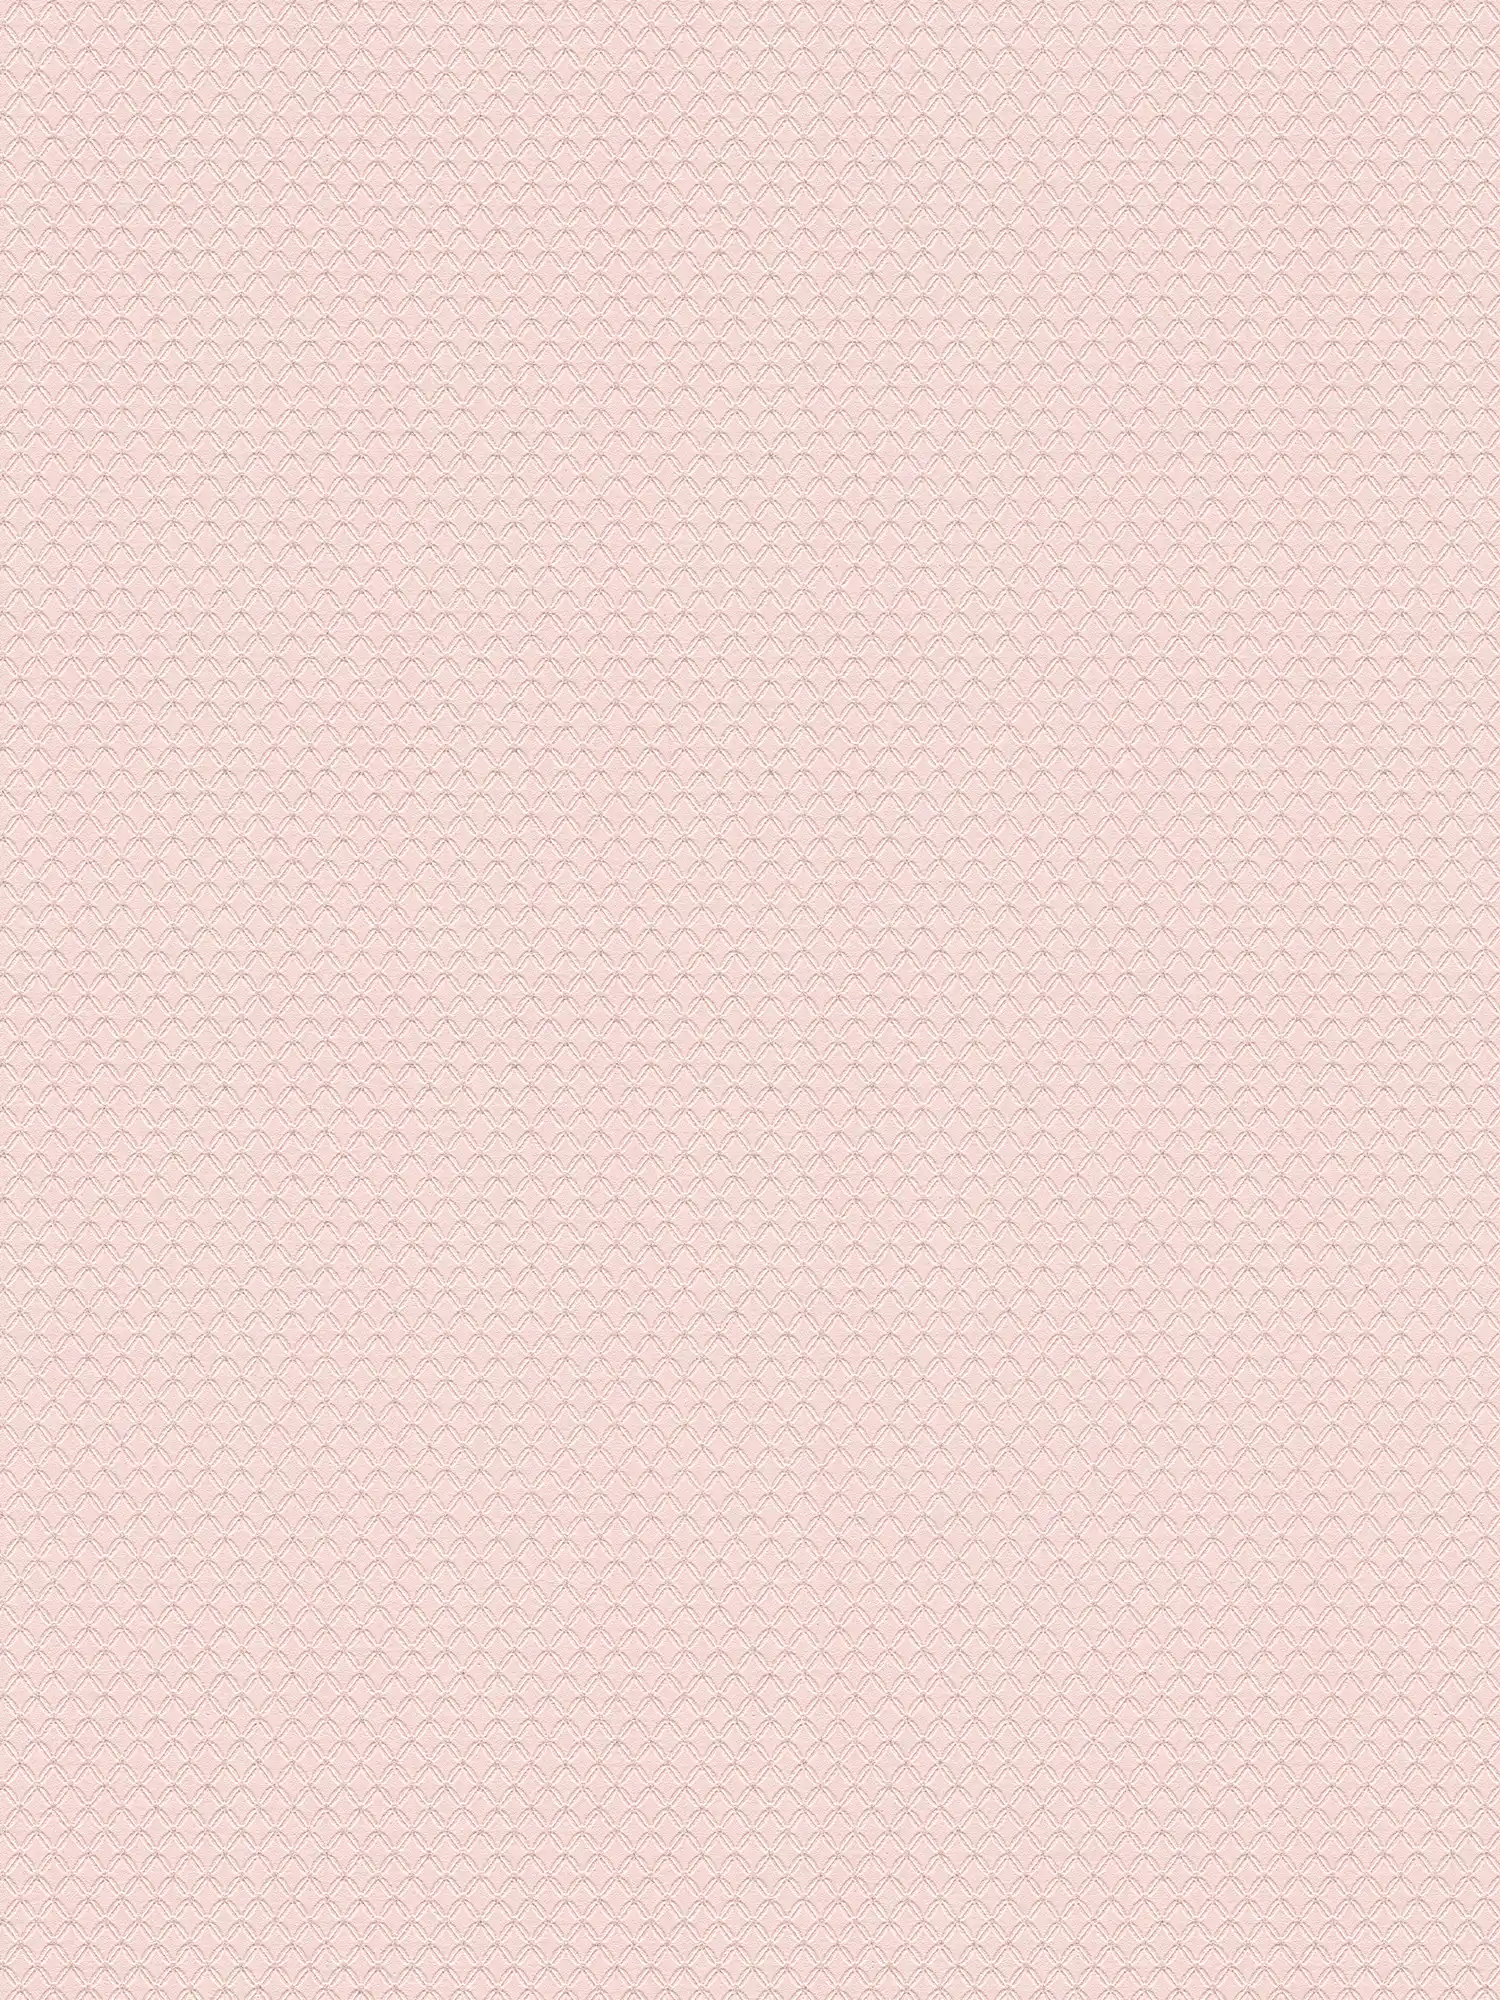 Glitter wallpaper with light diamond structure - pink, purple
